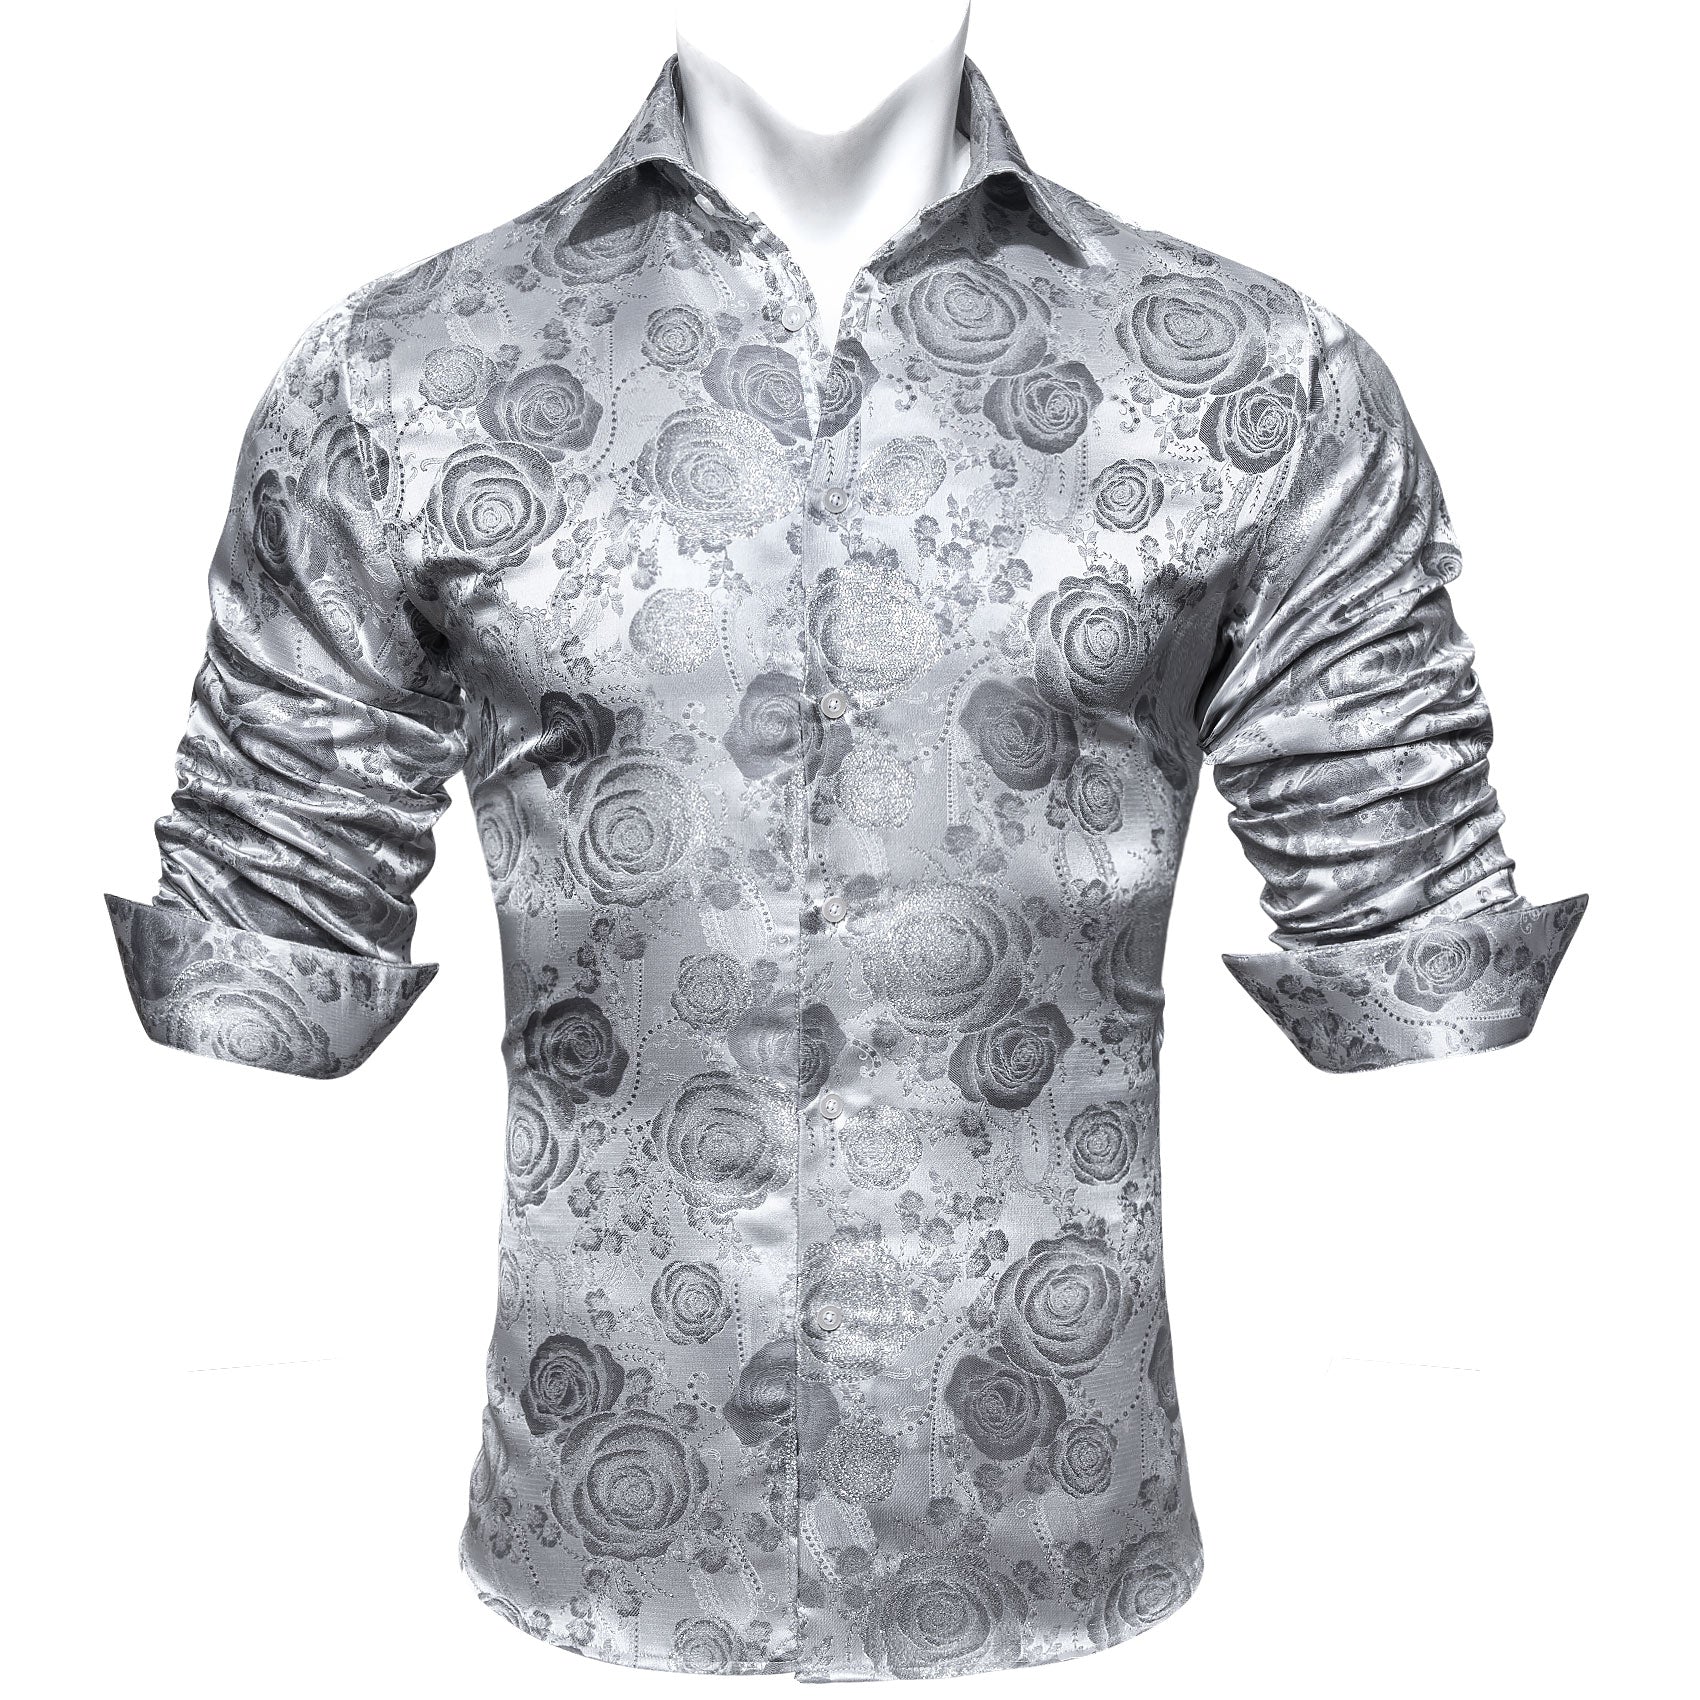 Barry.wang Button Down Shirt Silver Flower Men's Silk Long Sleeve Shirt Fashion